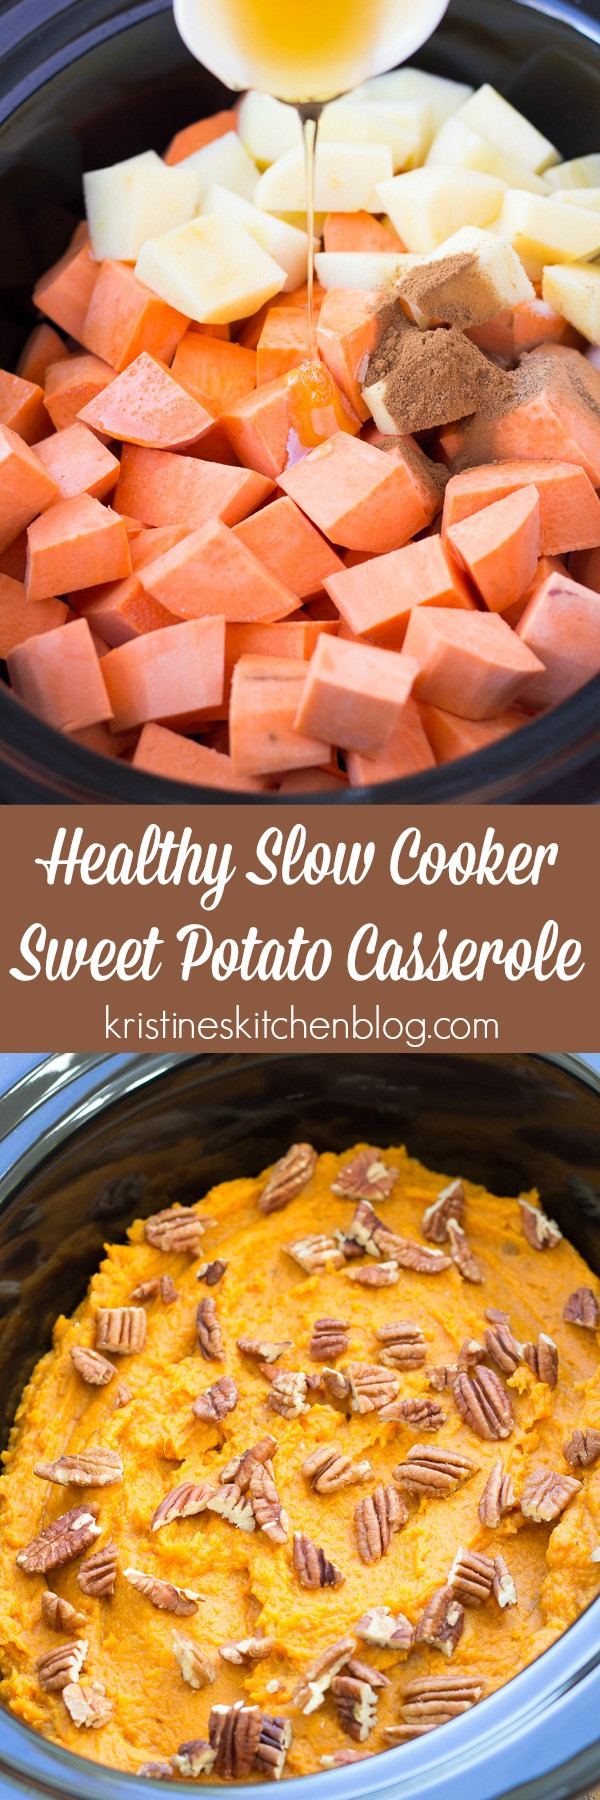 Healthy Crockpot Side Dishes
 Healthy Slow Cooker Sweet Potato Casserole Kristine s